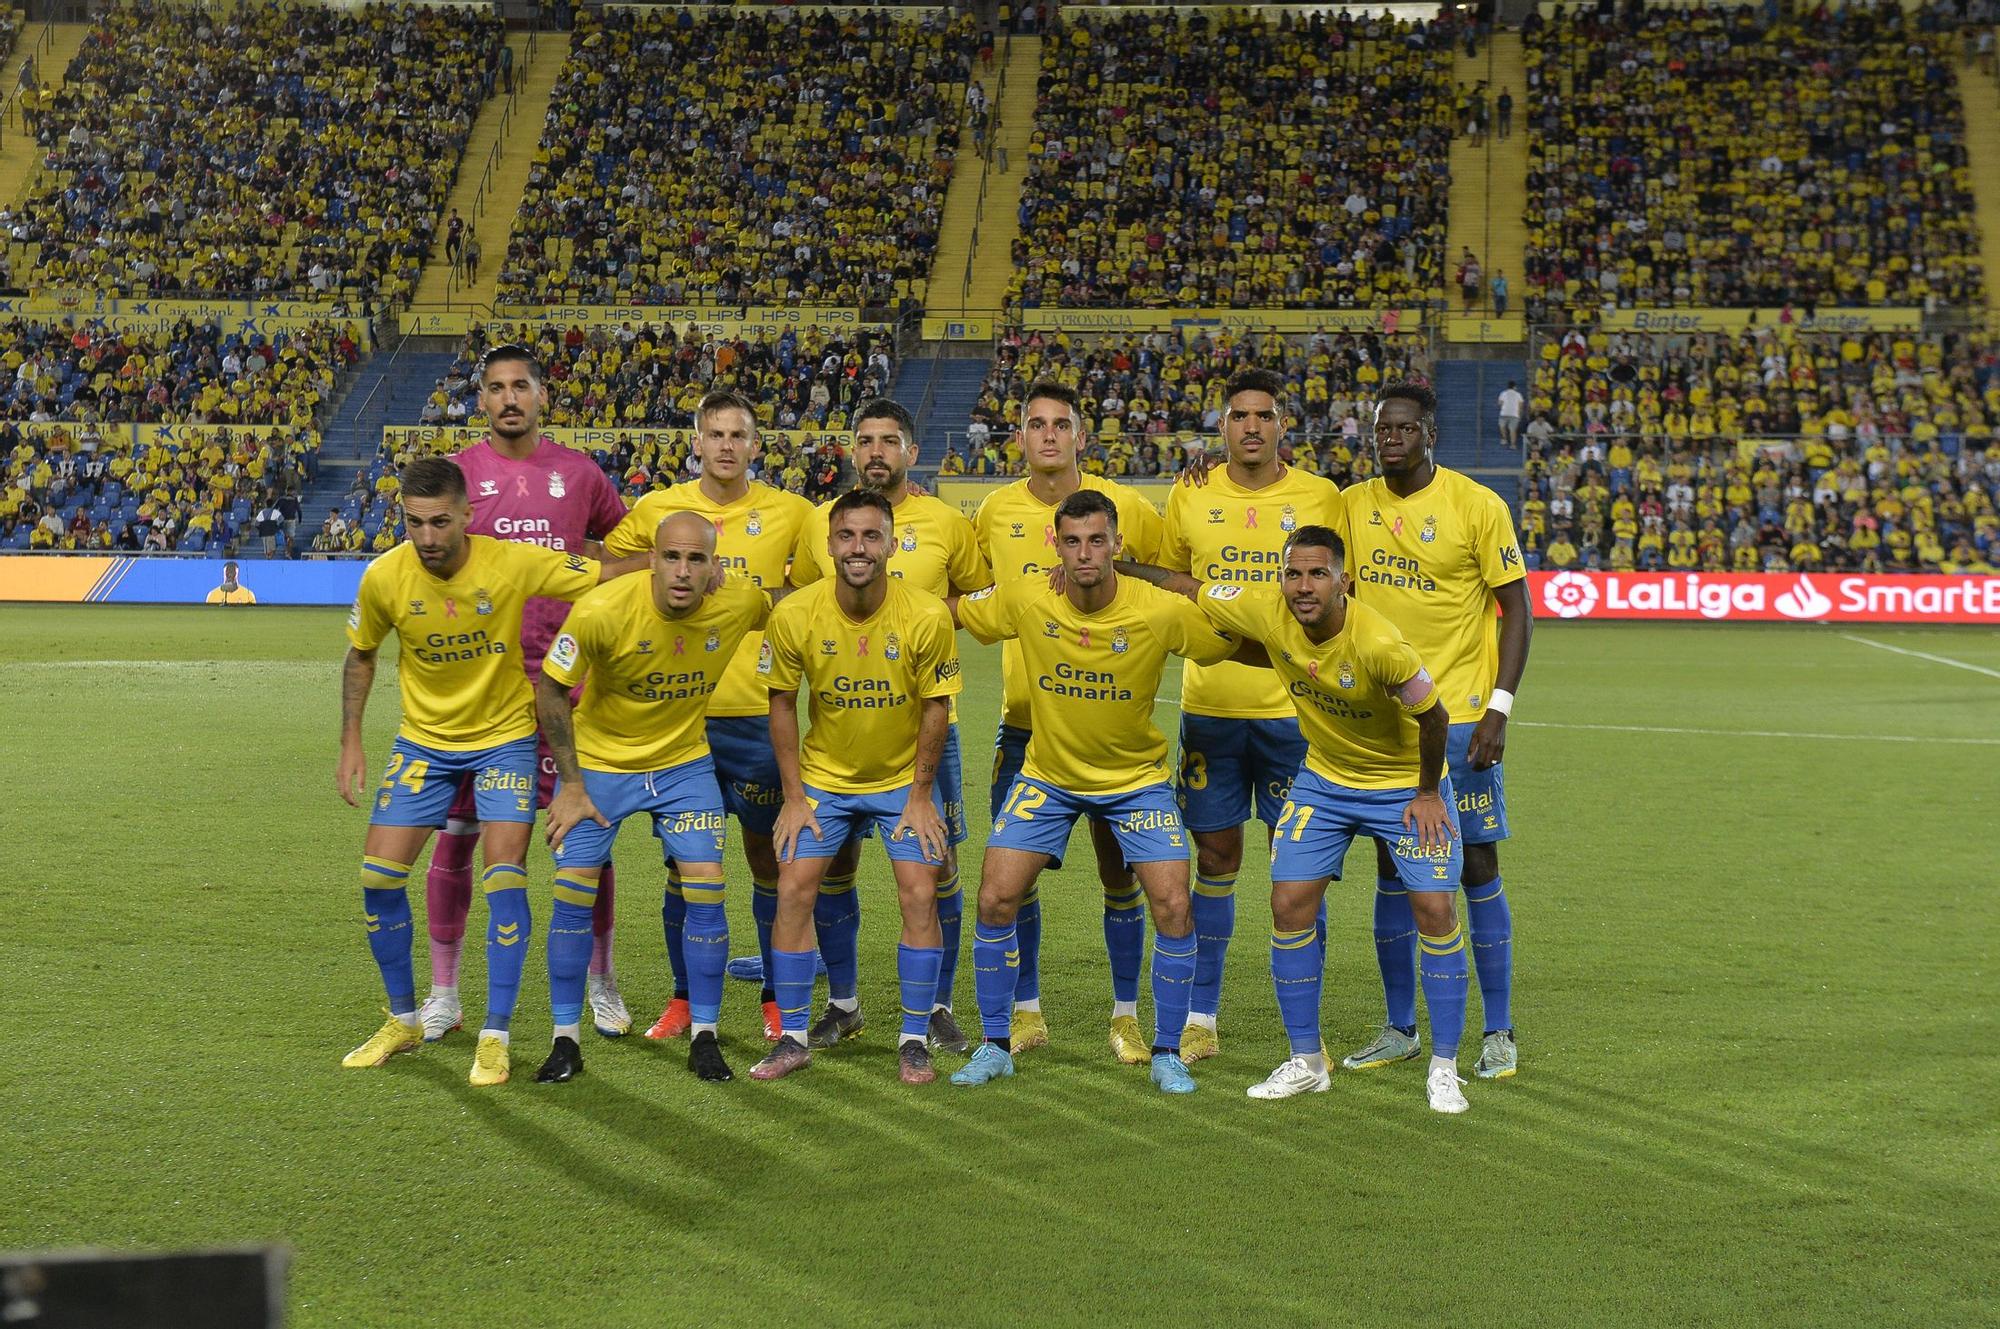 LaLiga SmartBank: UD Las Palmas -FC Cartagena